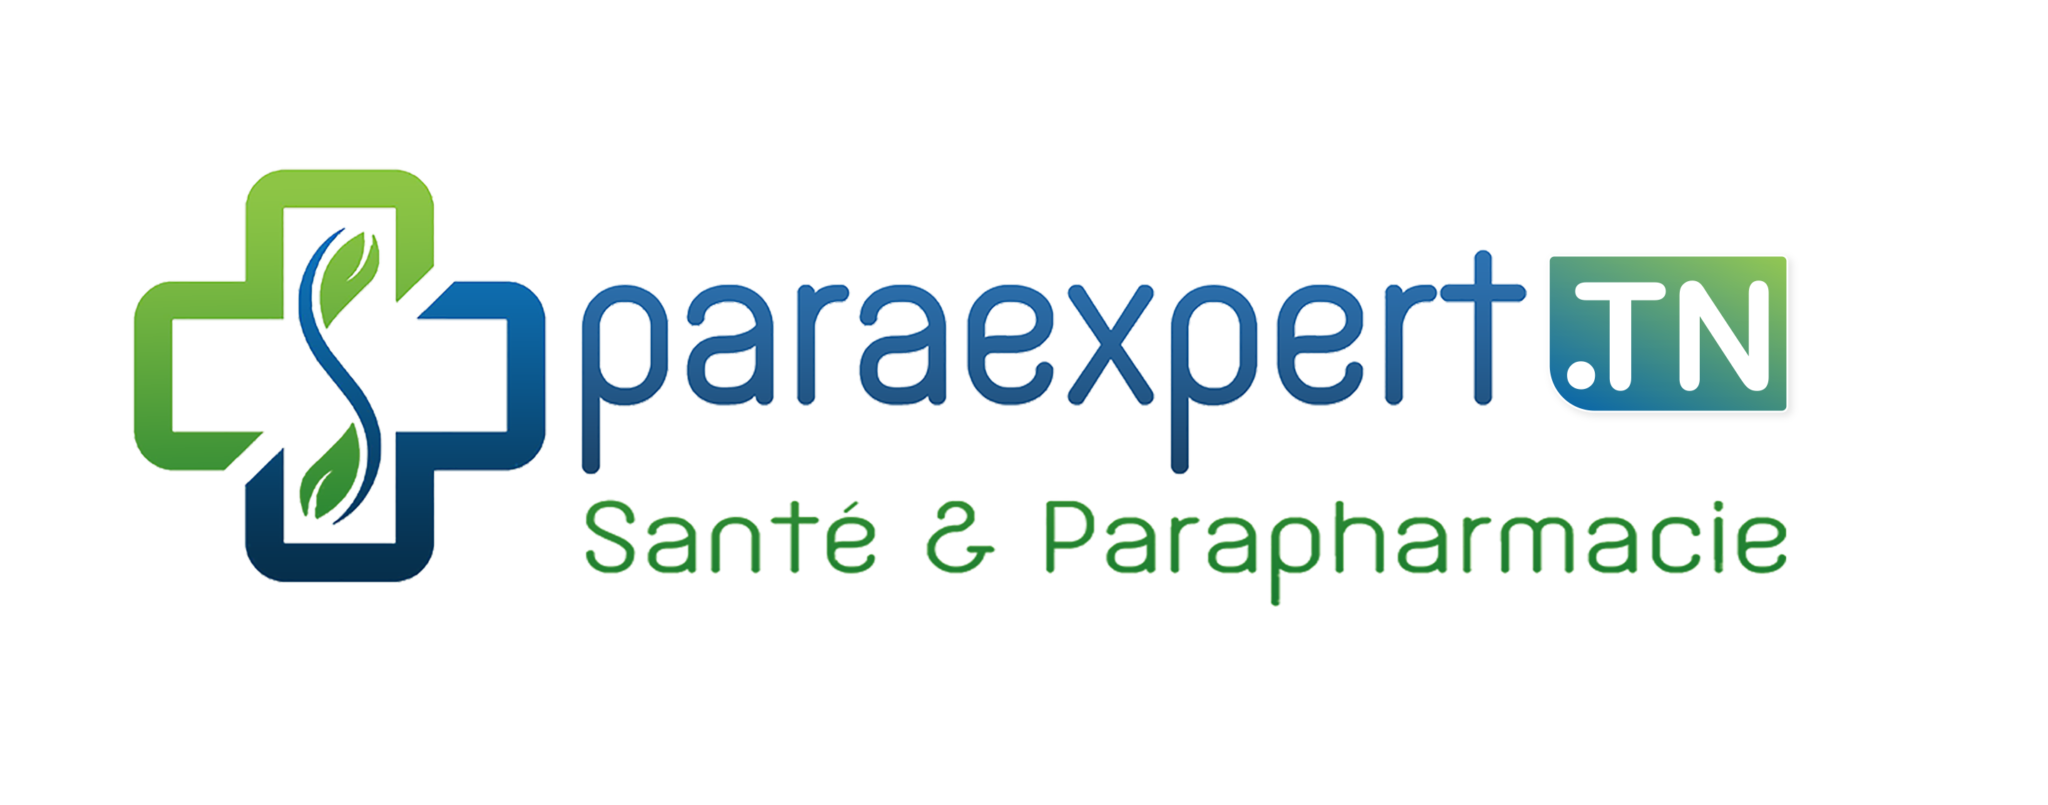 logo paraexpert.tn parapharmacie en tunisie